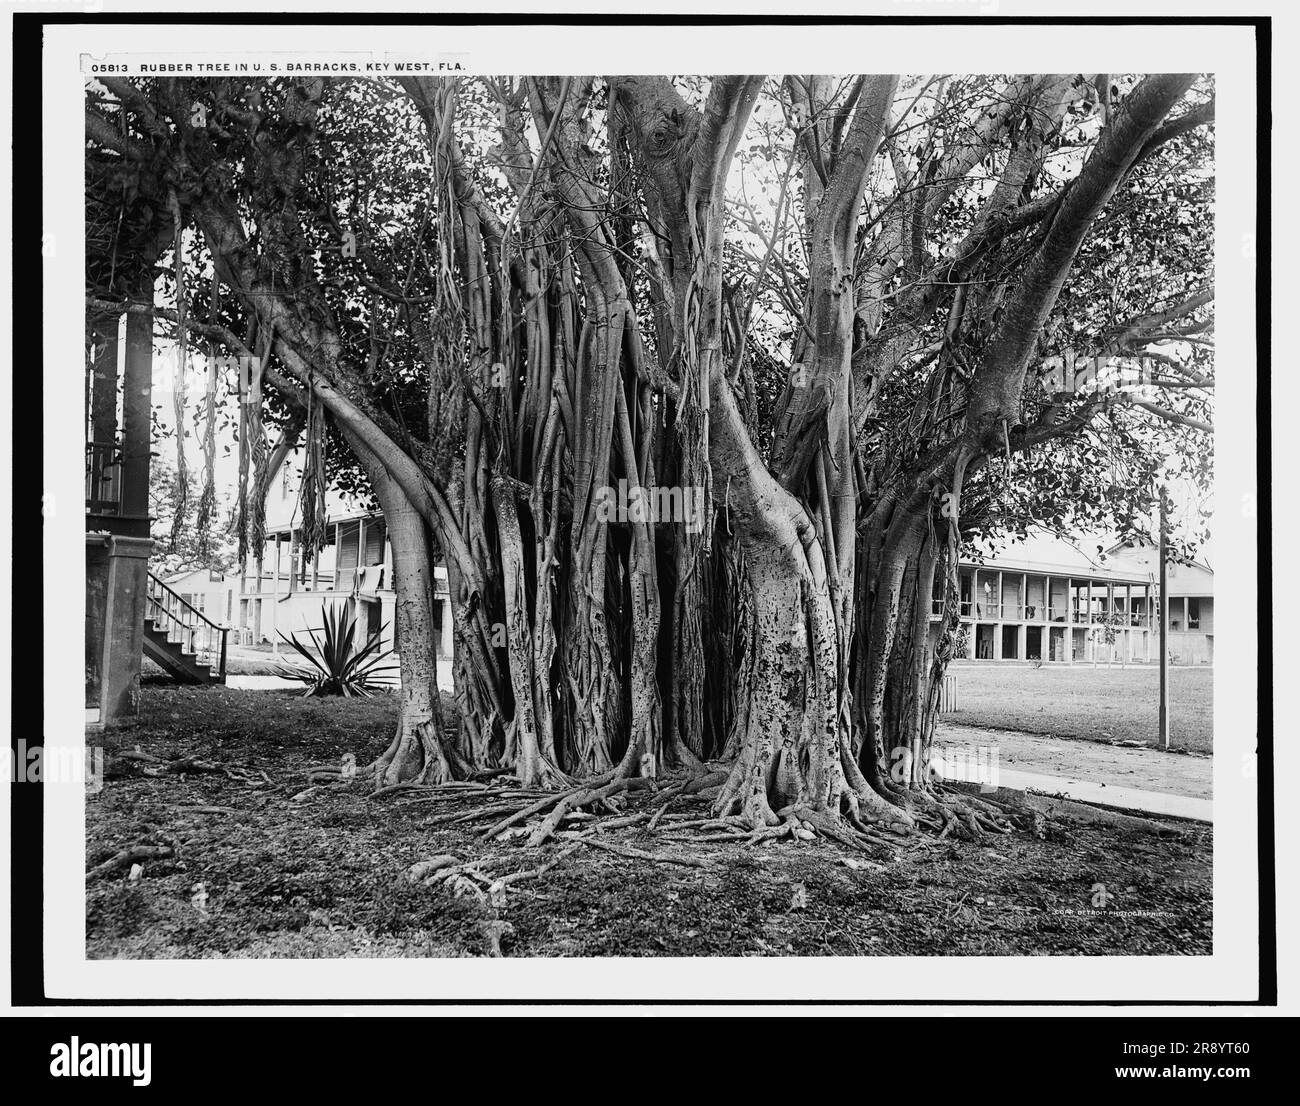 Rubber tree in U.S. barracks, Key West, Fla., between 1890 and 1901. Stock Photo